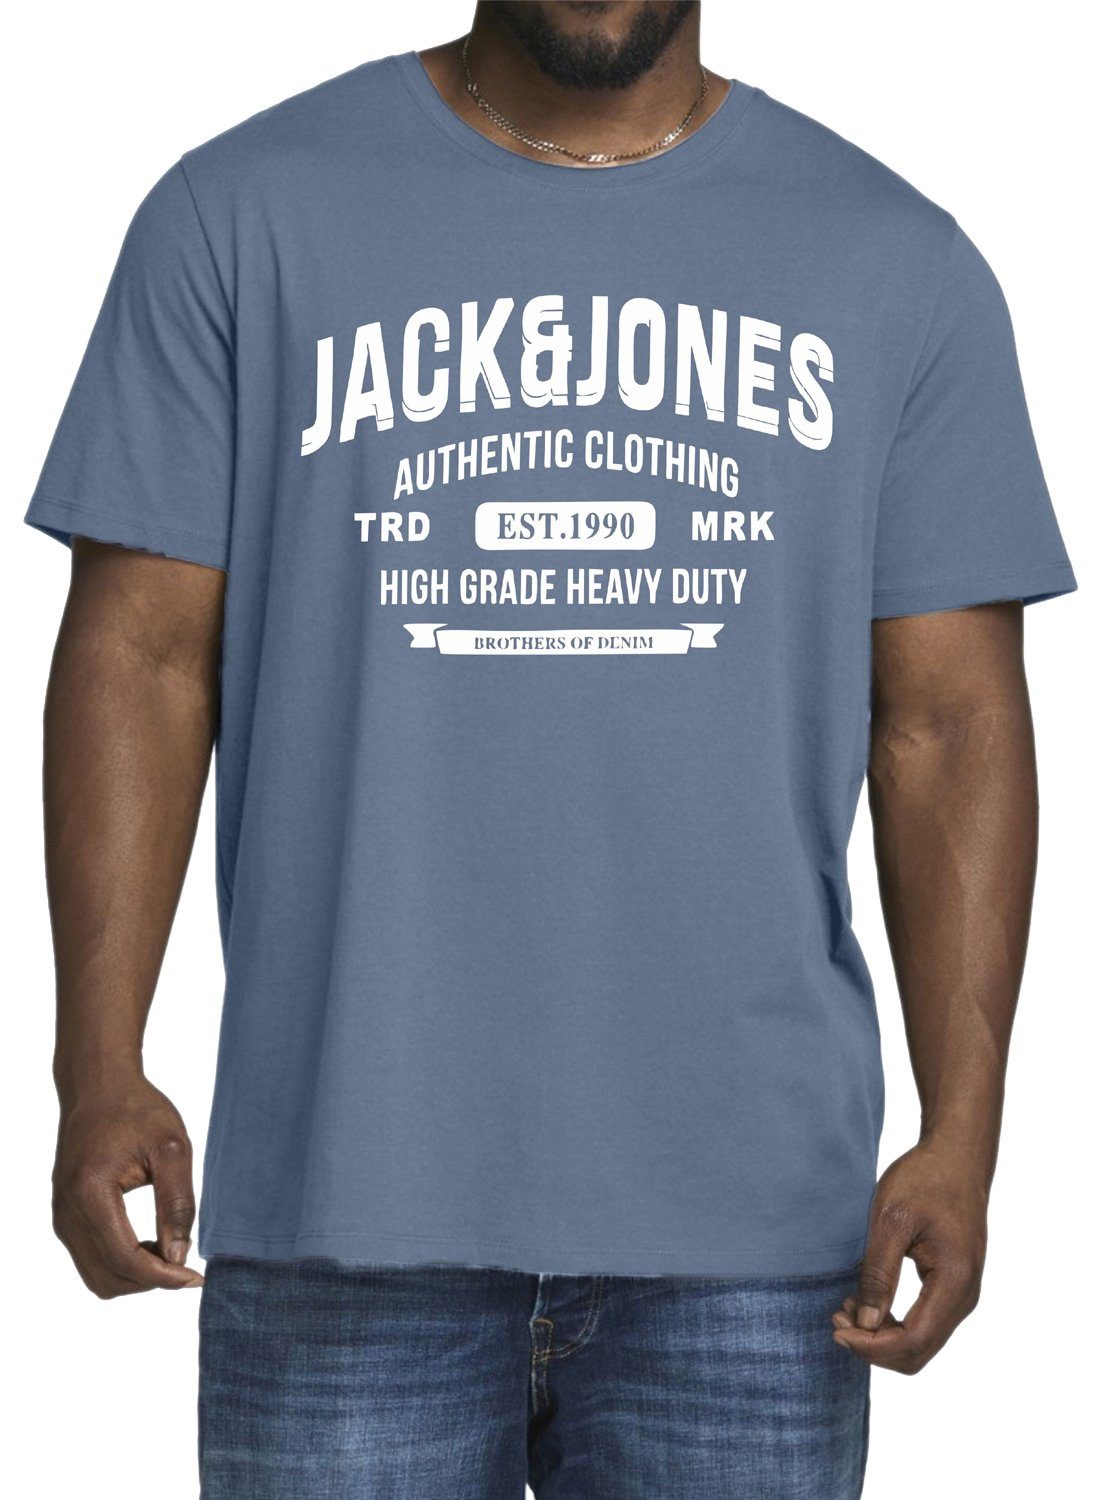 3er aus 7 Pack Jones Print-Shirt (Spar-Set, Baumwolle 3er-Pack) Jack Shirt, Big Size Plus & Übergröße Mix